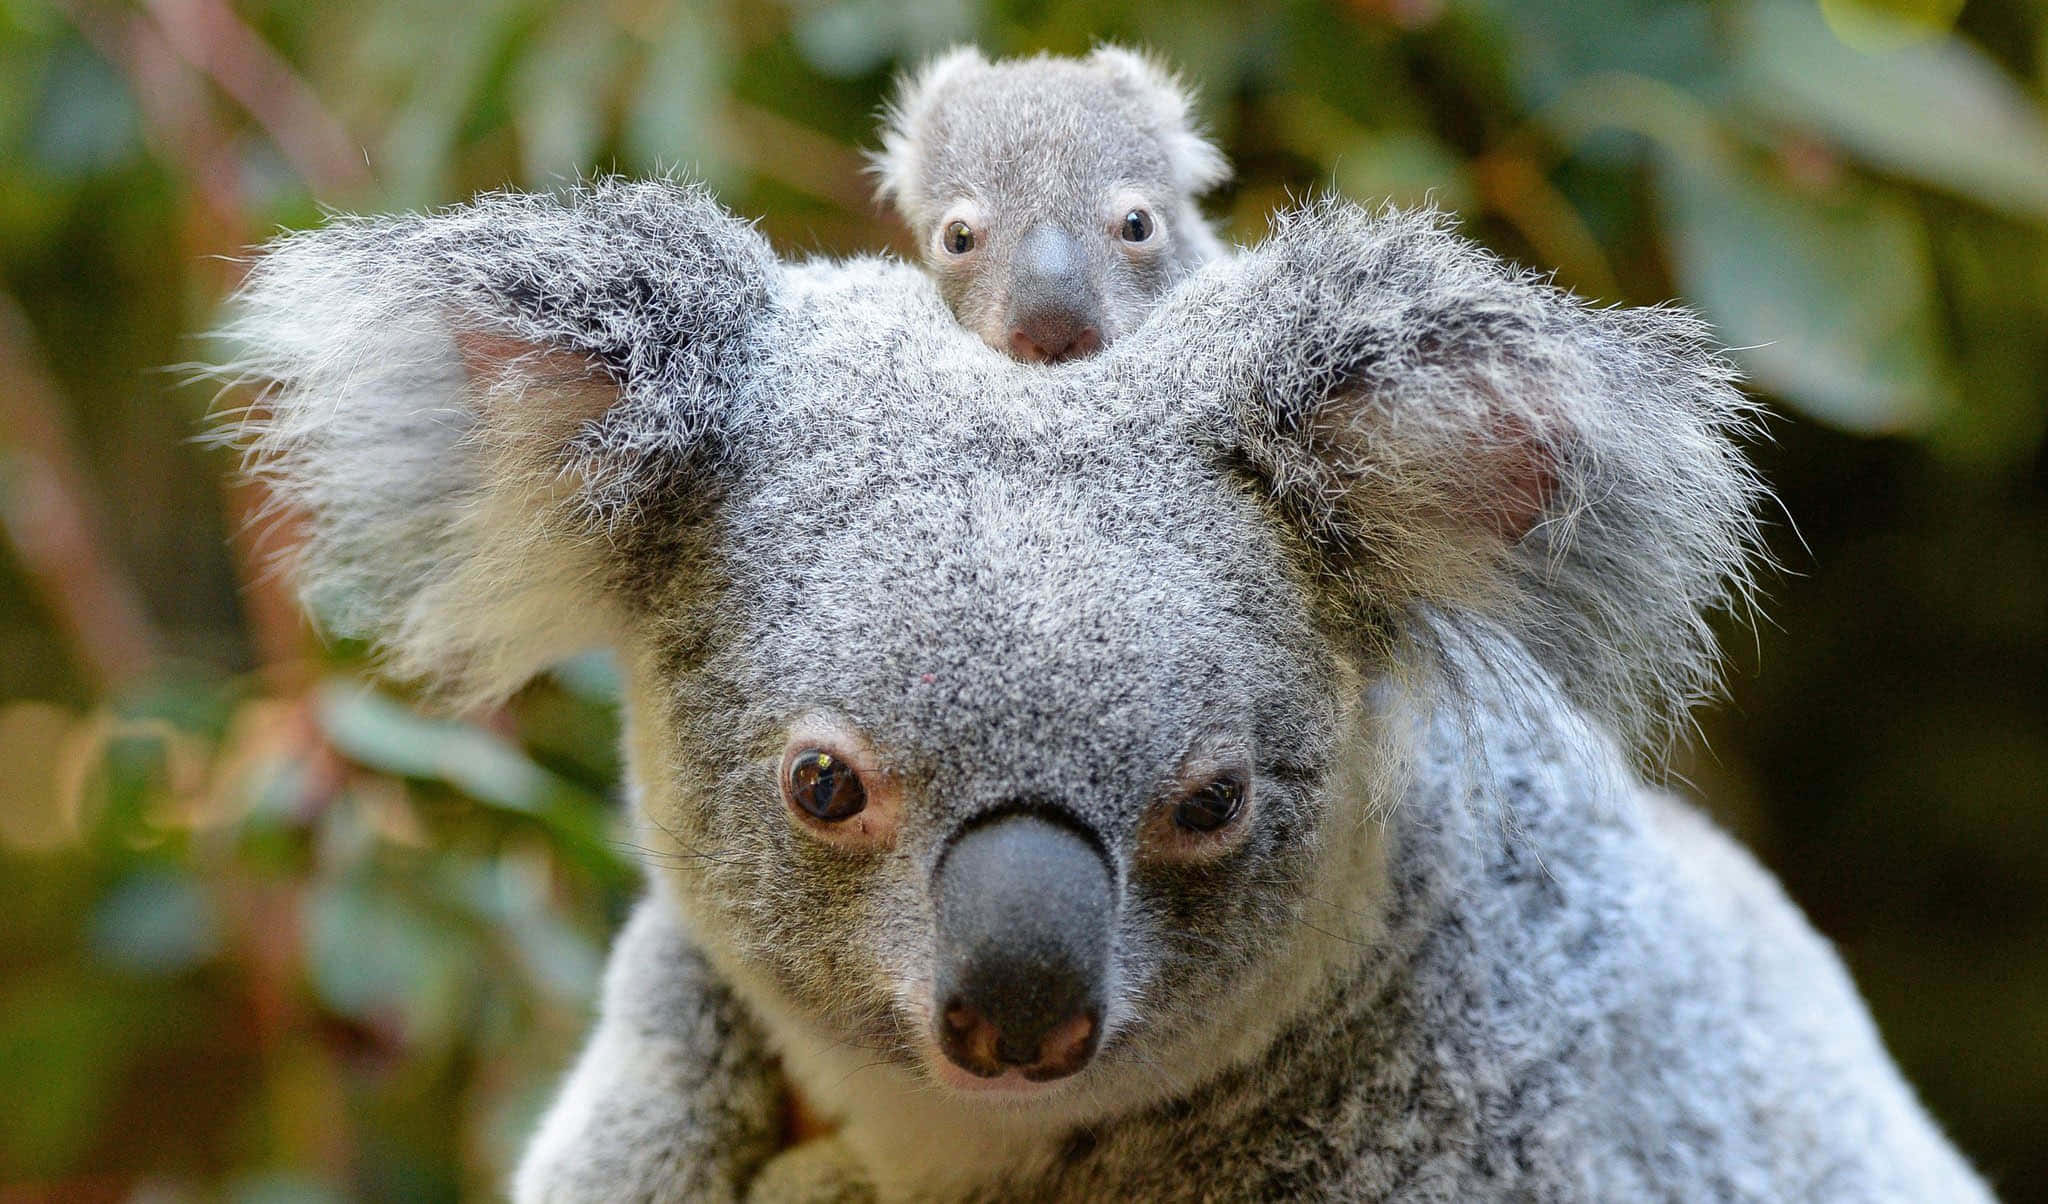 Adorable Koala Sitting on Tree